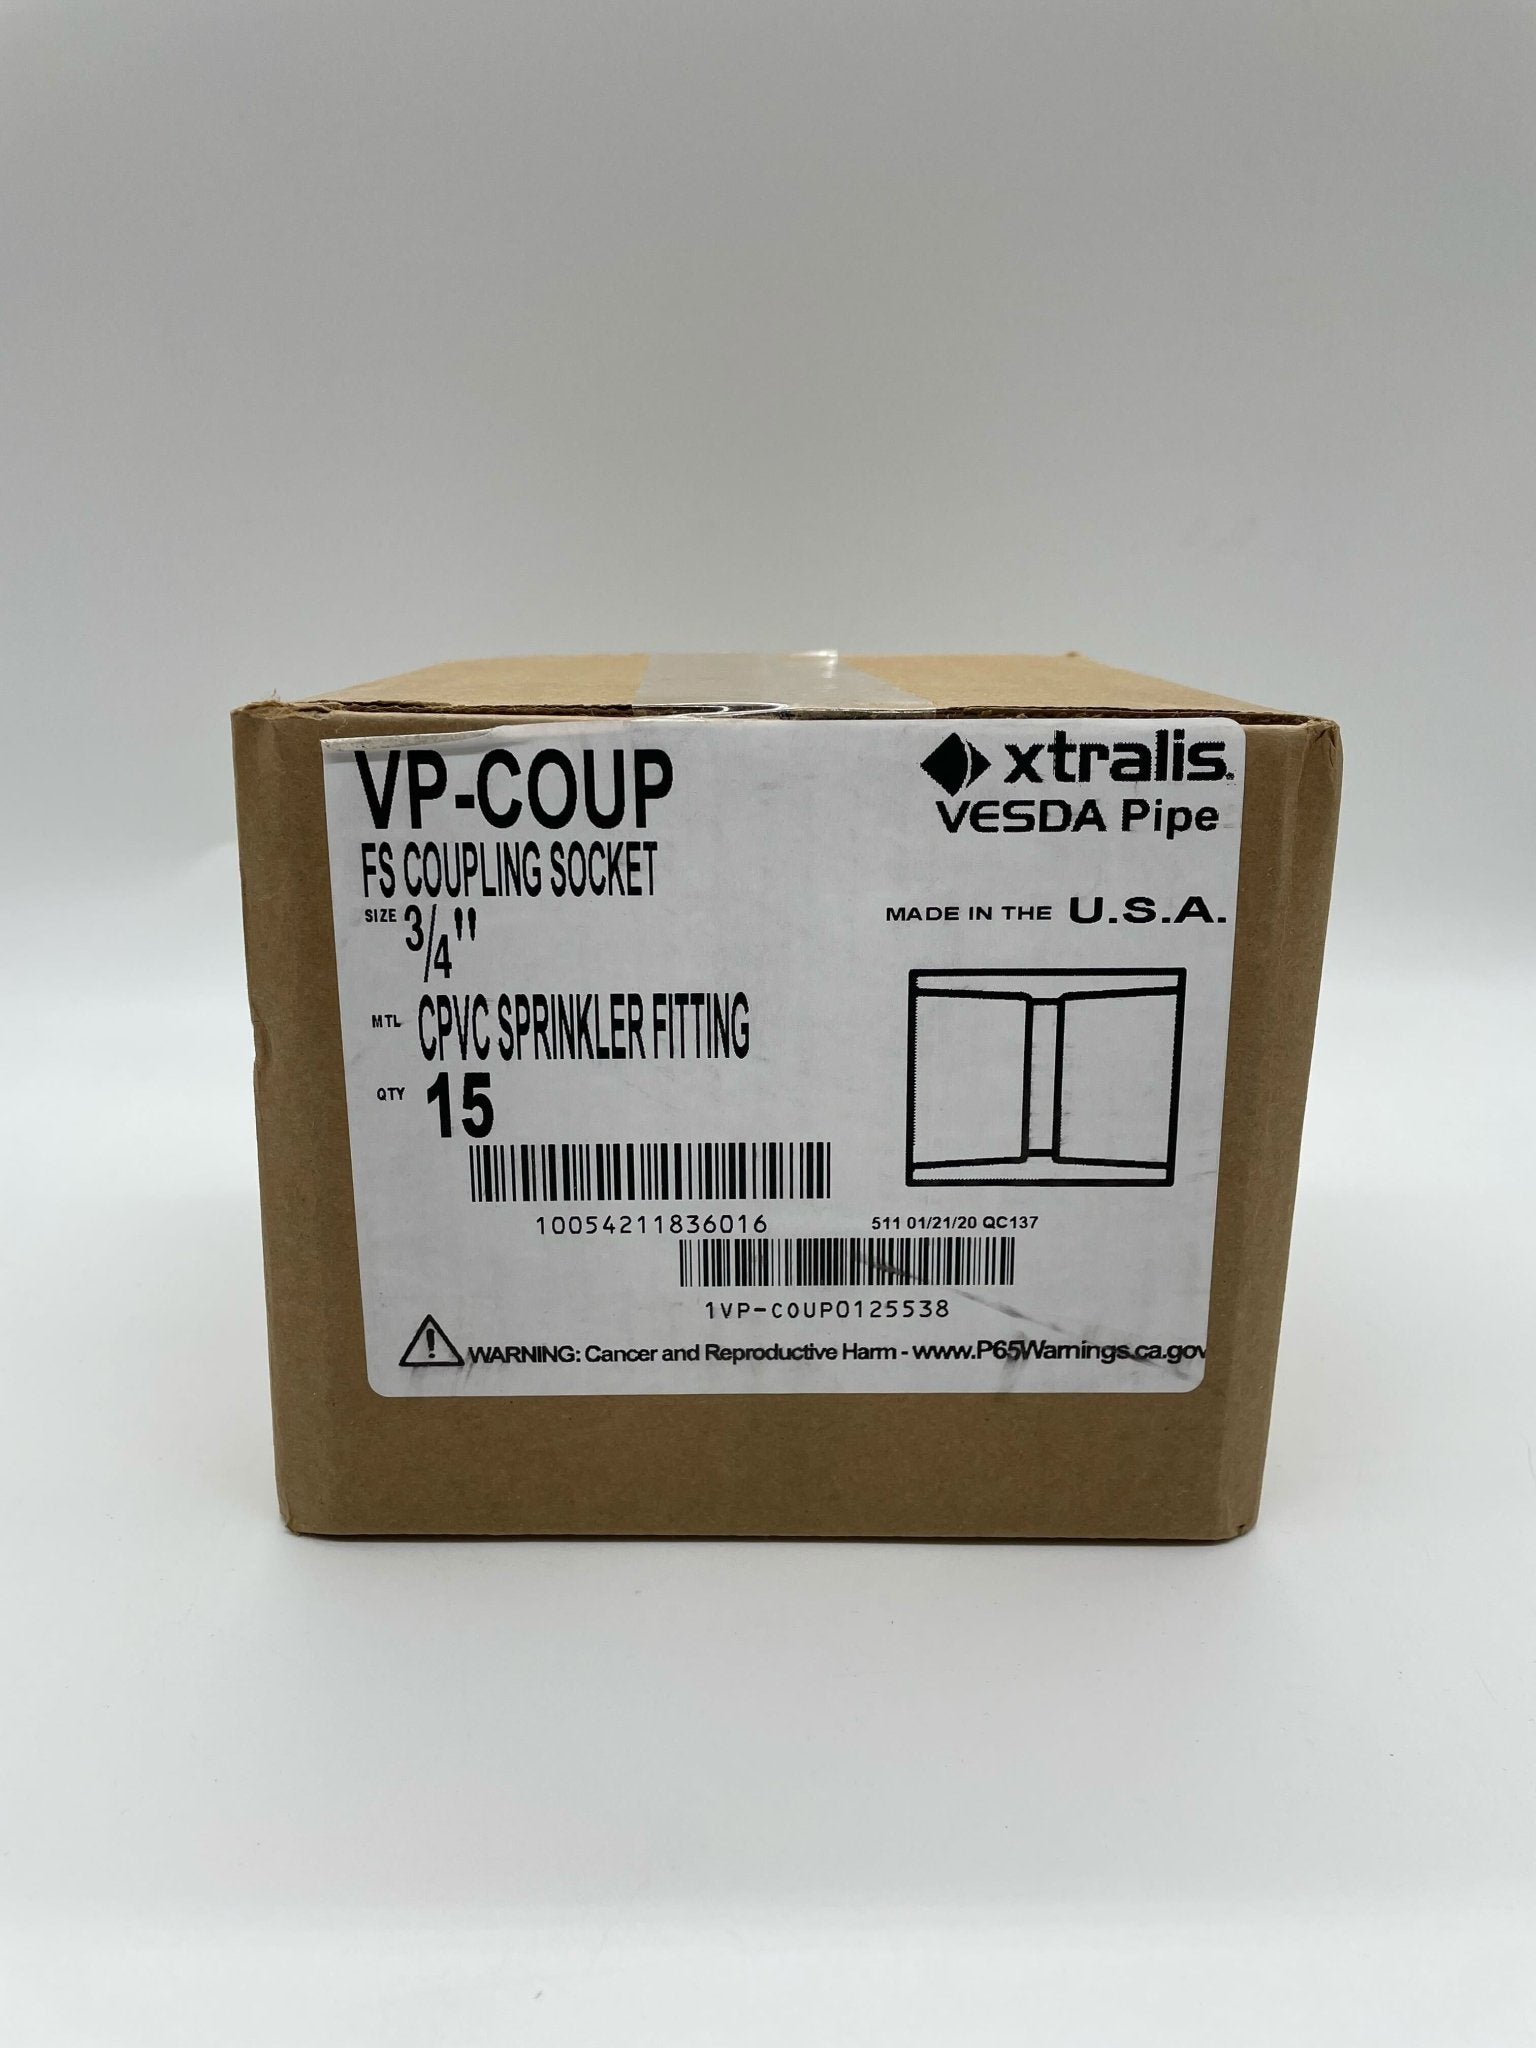 Vesda VP-COUP Socket To Socket Cpvc Couplings (15 Per Box) - The Fire Alarm Supplier